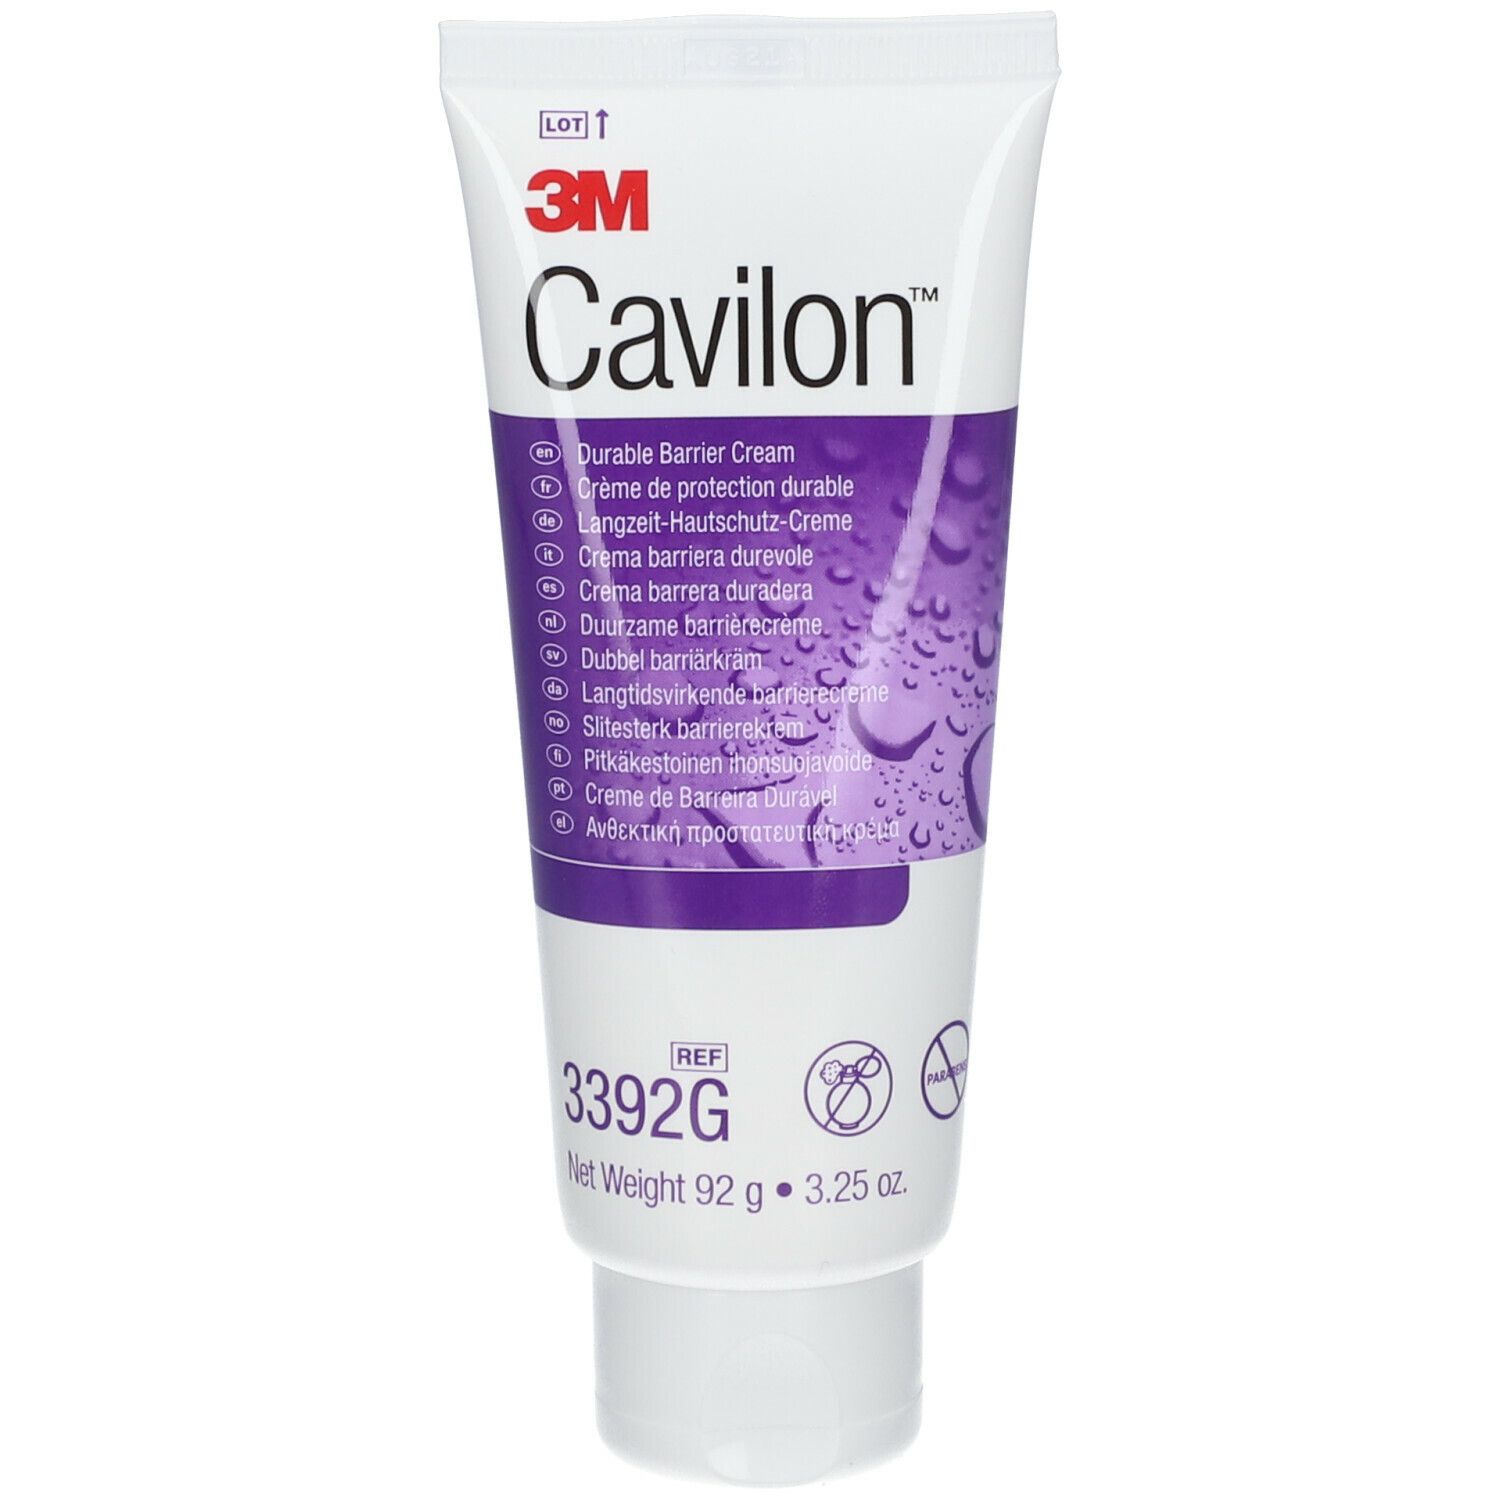 3M™ Cavilon™ Langzeit-Hautschutz-Creme